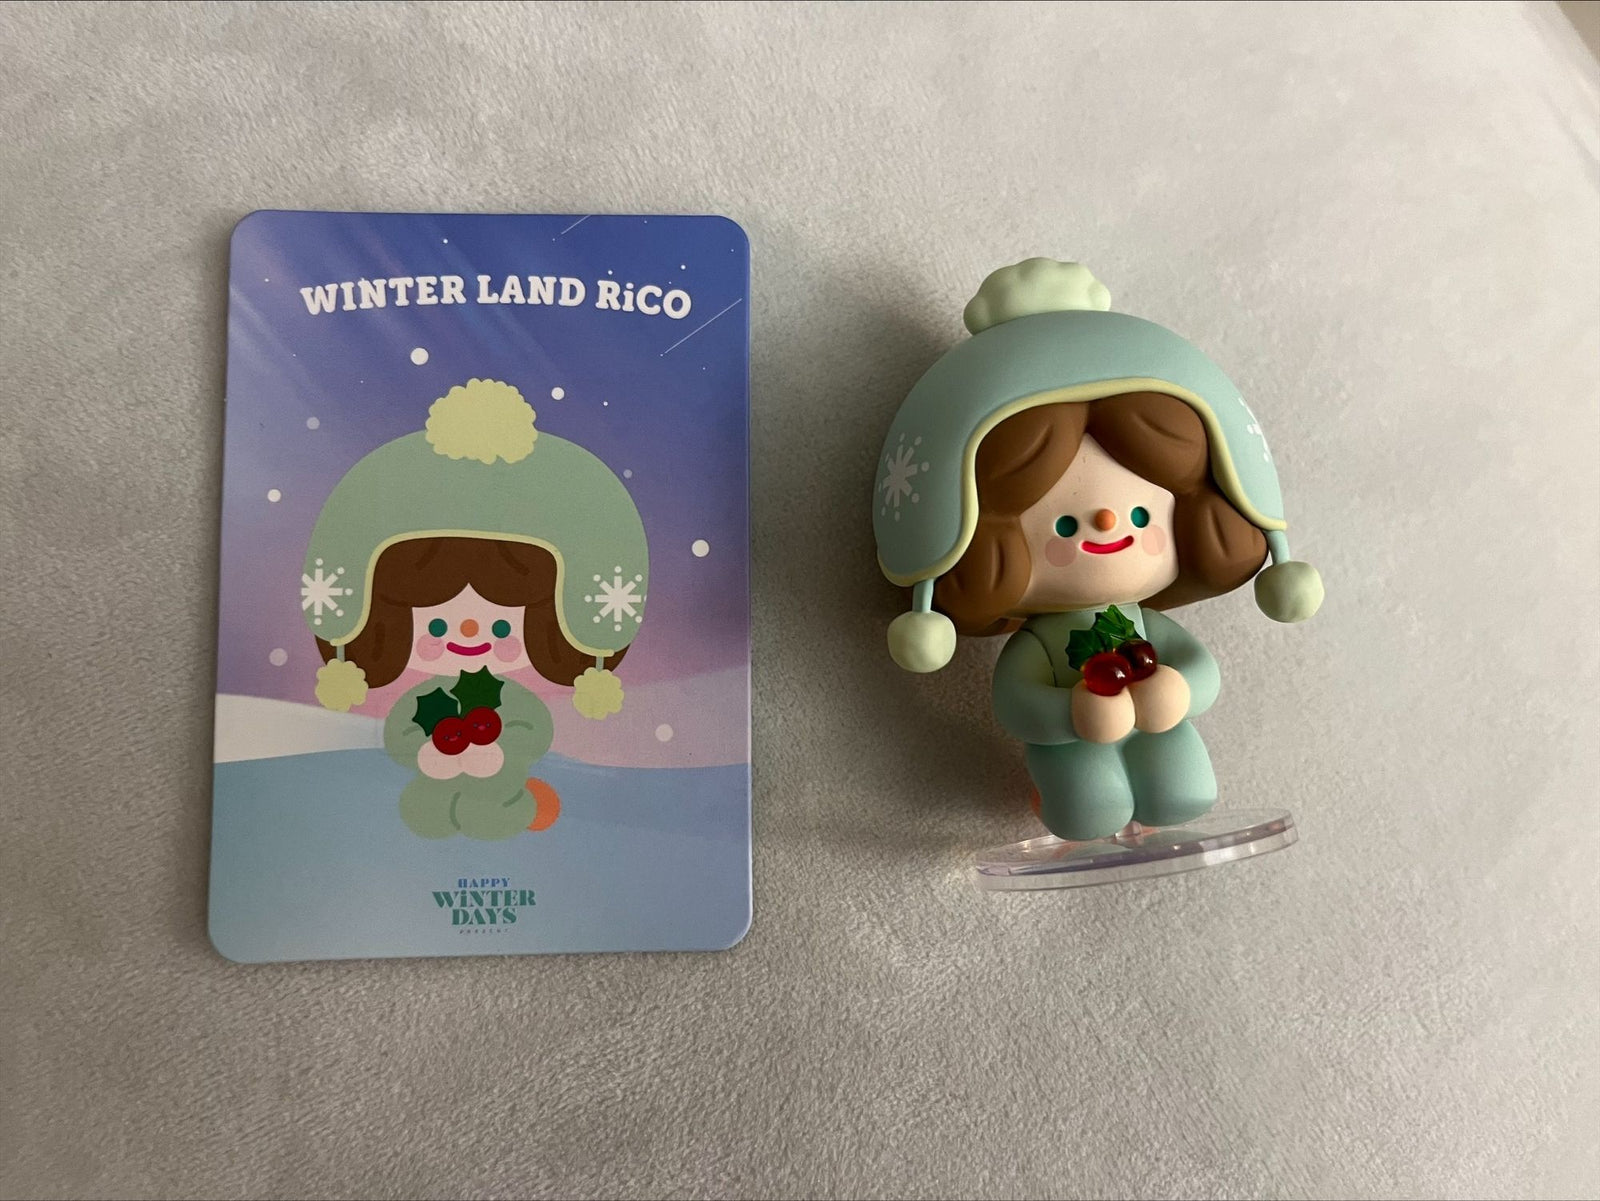 Winter Land Rico - RiCO Happy Winter Days Blind Box Series by Rico x Finding Unicorn - 1